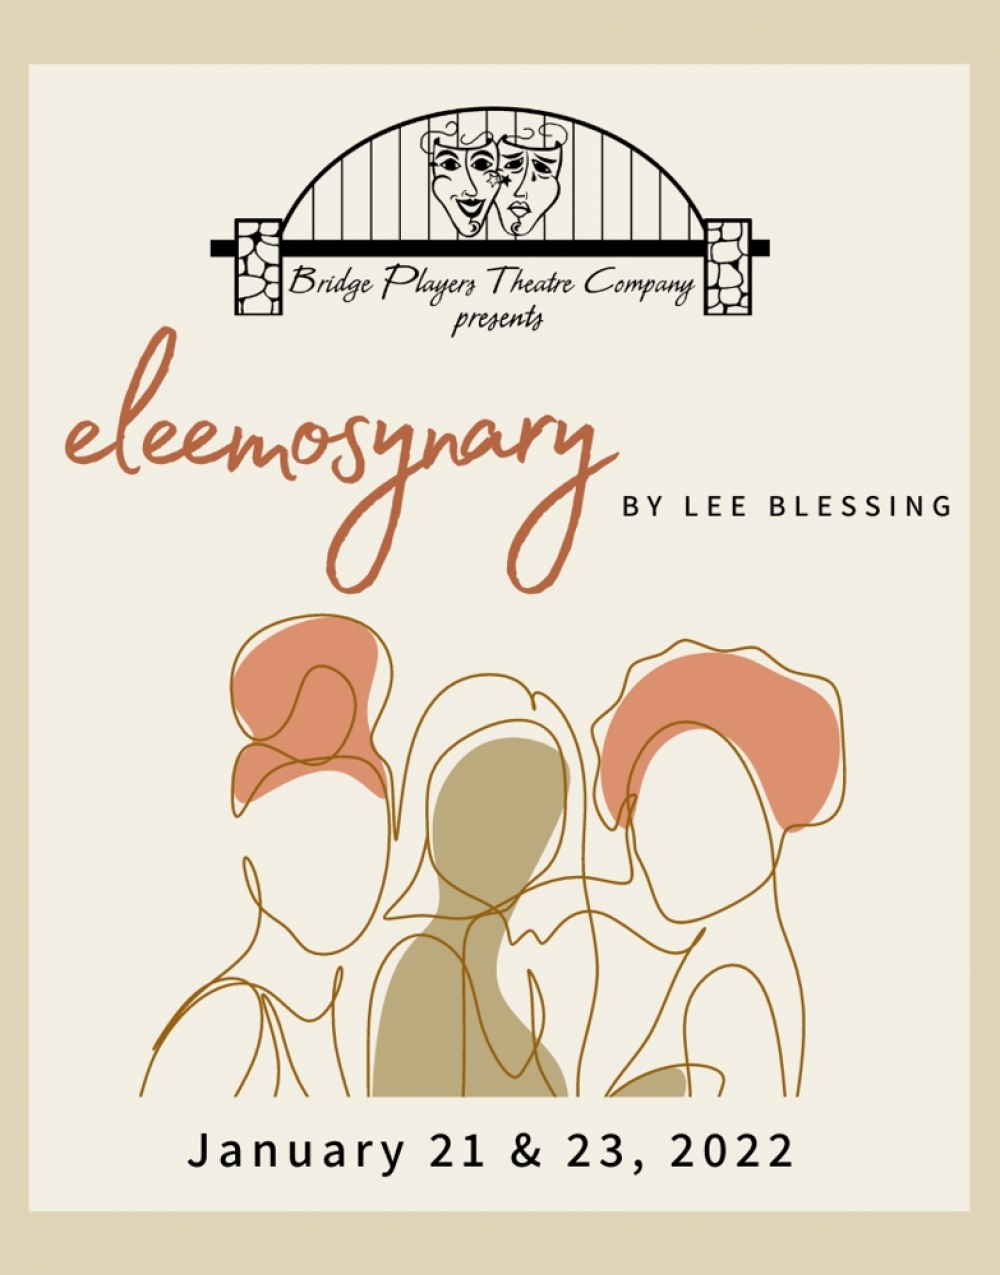 Eleemosynary - Bridge Players Theatre Company Stage Mag